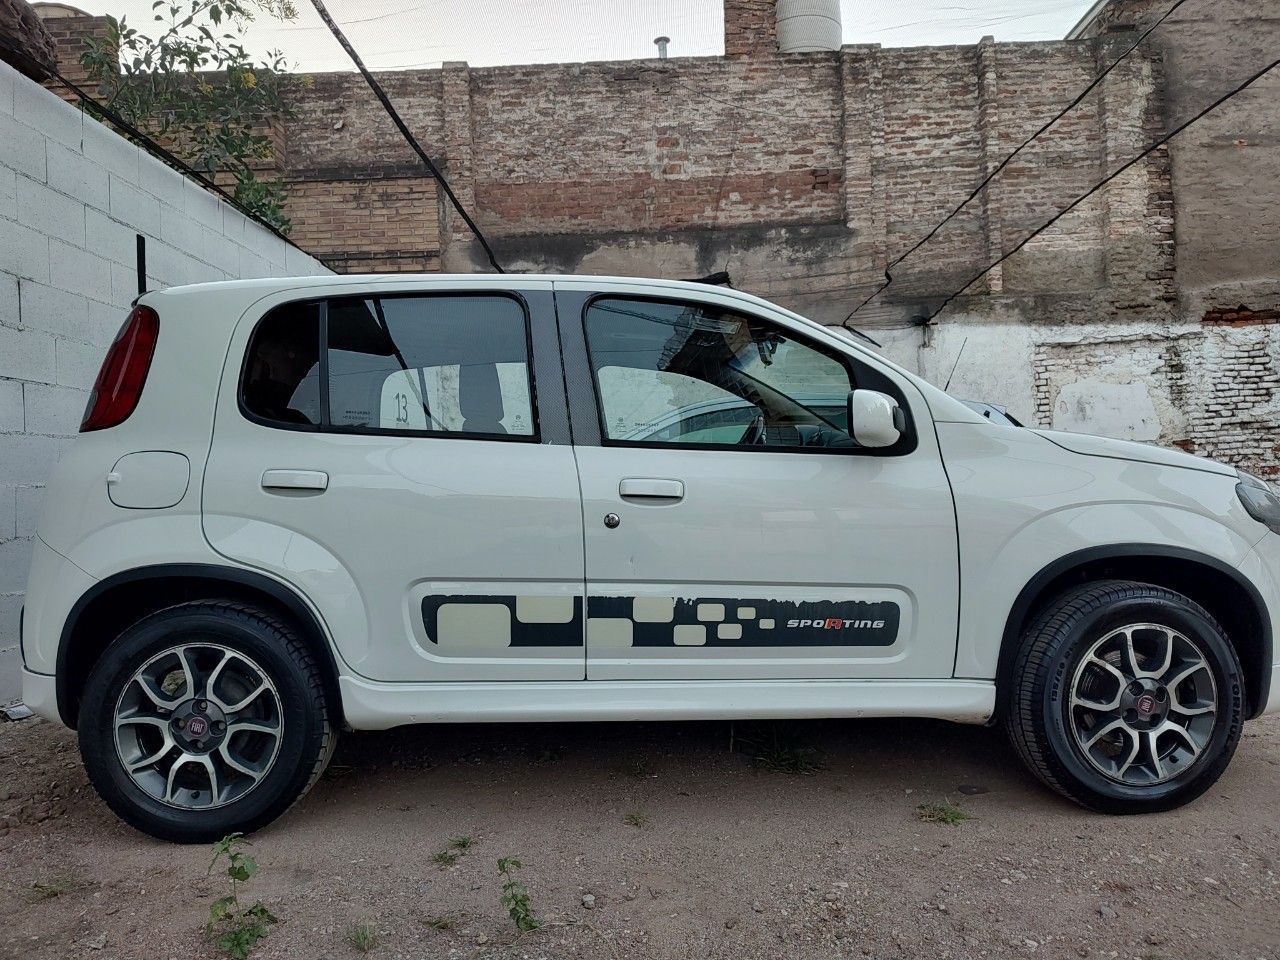 Fiat Uno Evo Usado en Córdoba, deRuedas